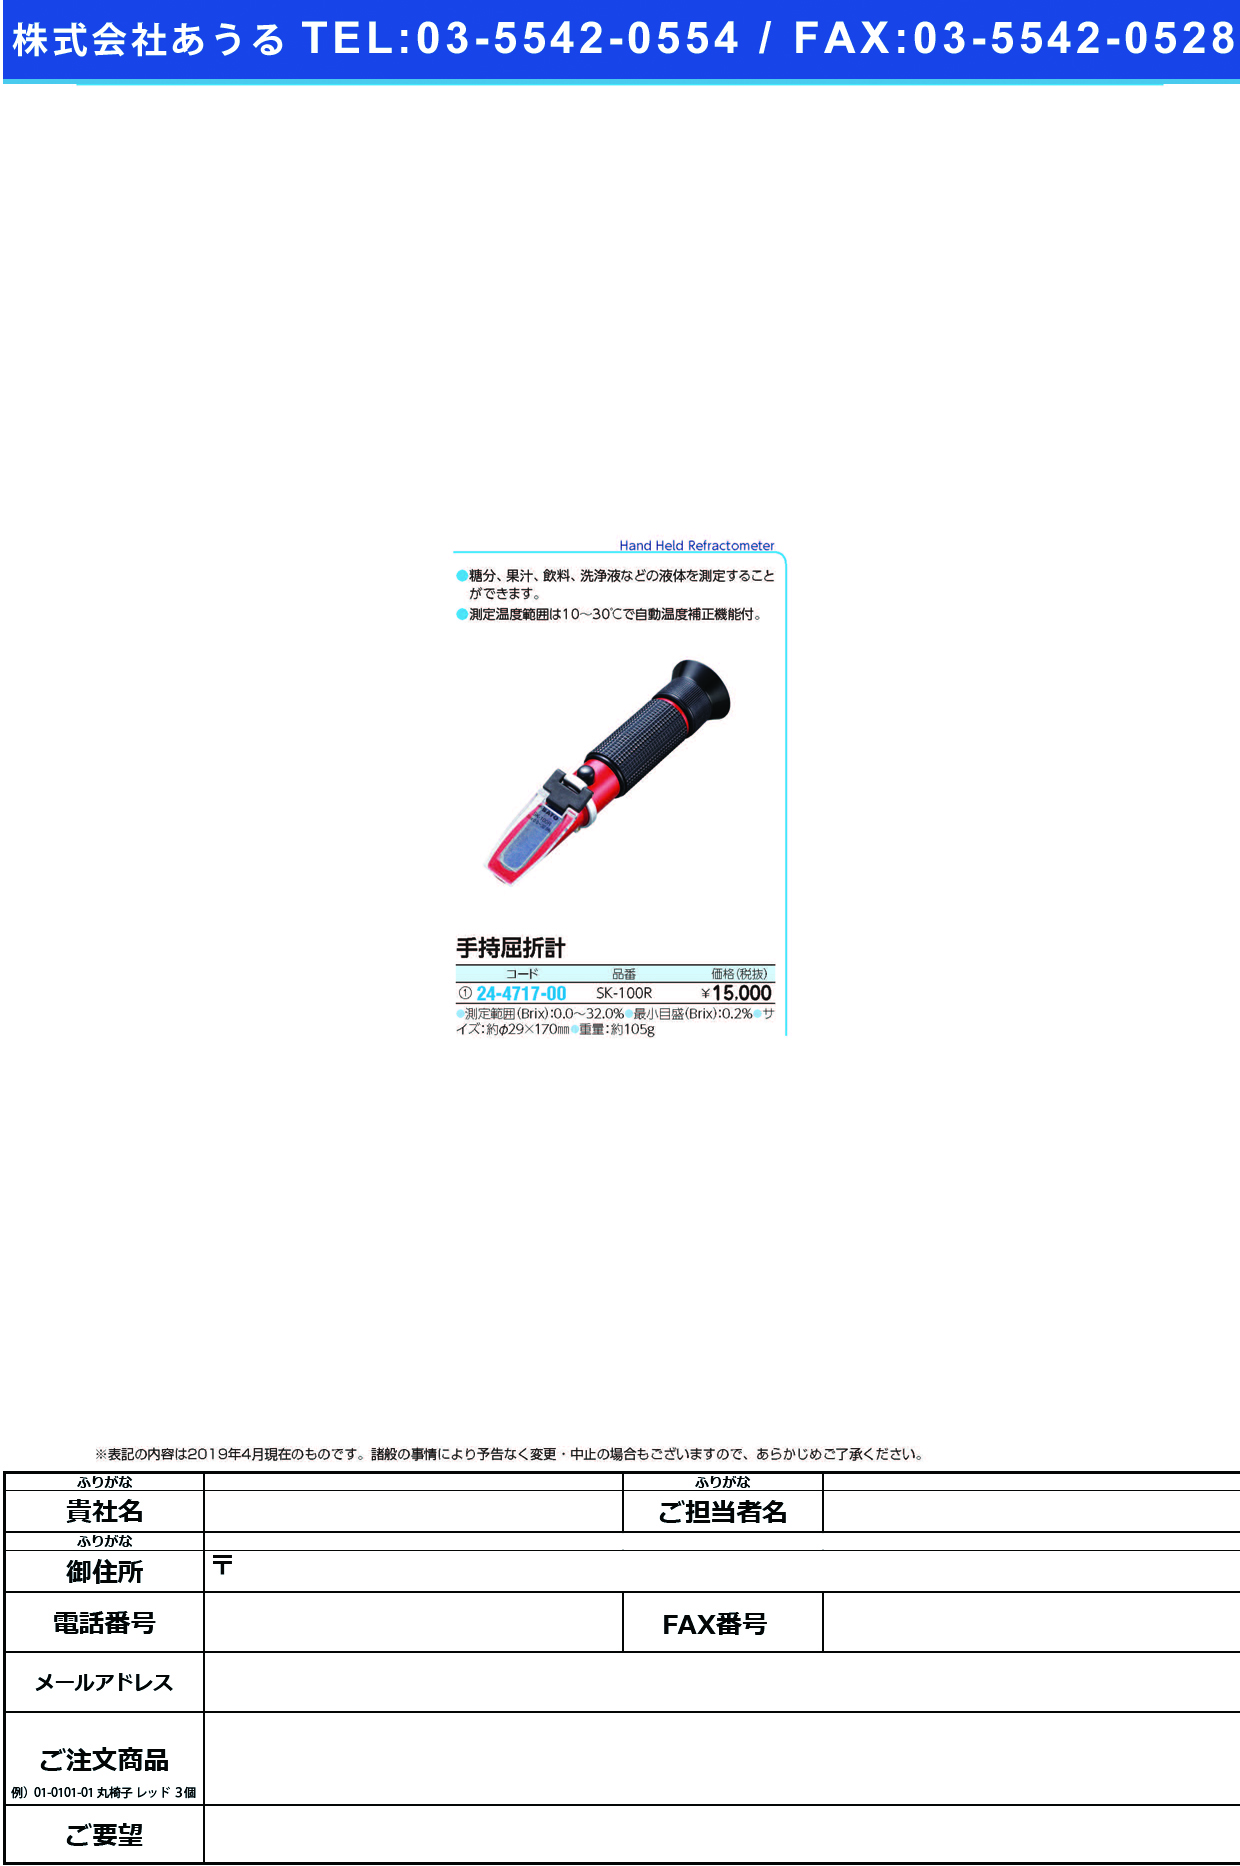 (24-4717-00)手持屈折計 SK-100R ﾃﾓﾁｸｯｾﾂｹｲ【1台単位】【2019年カタログ商品】